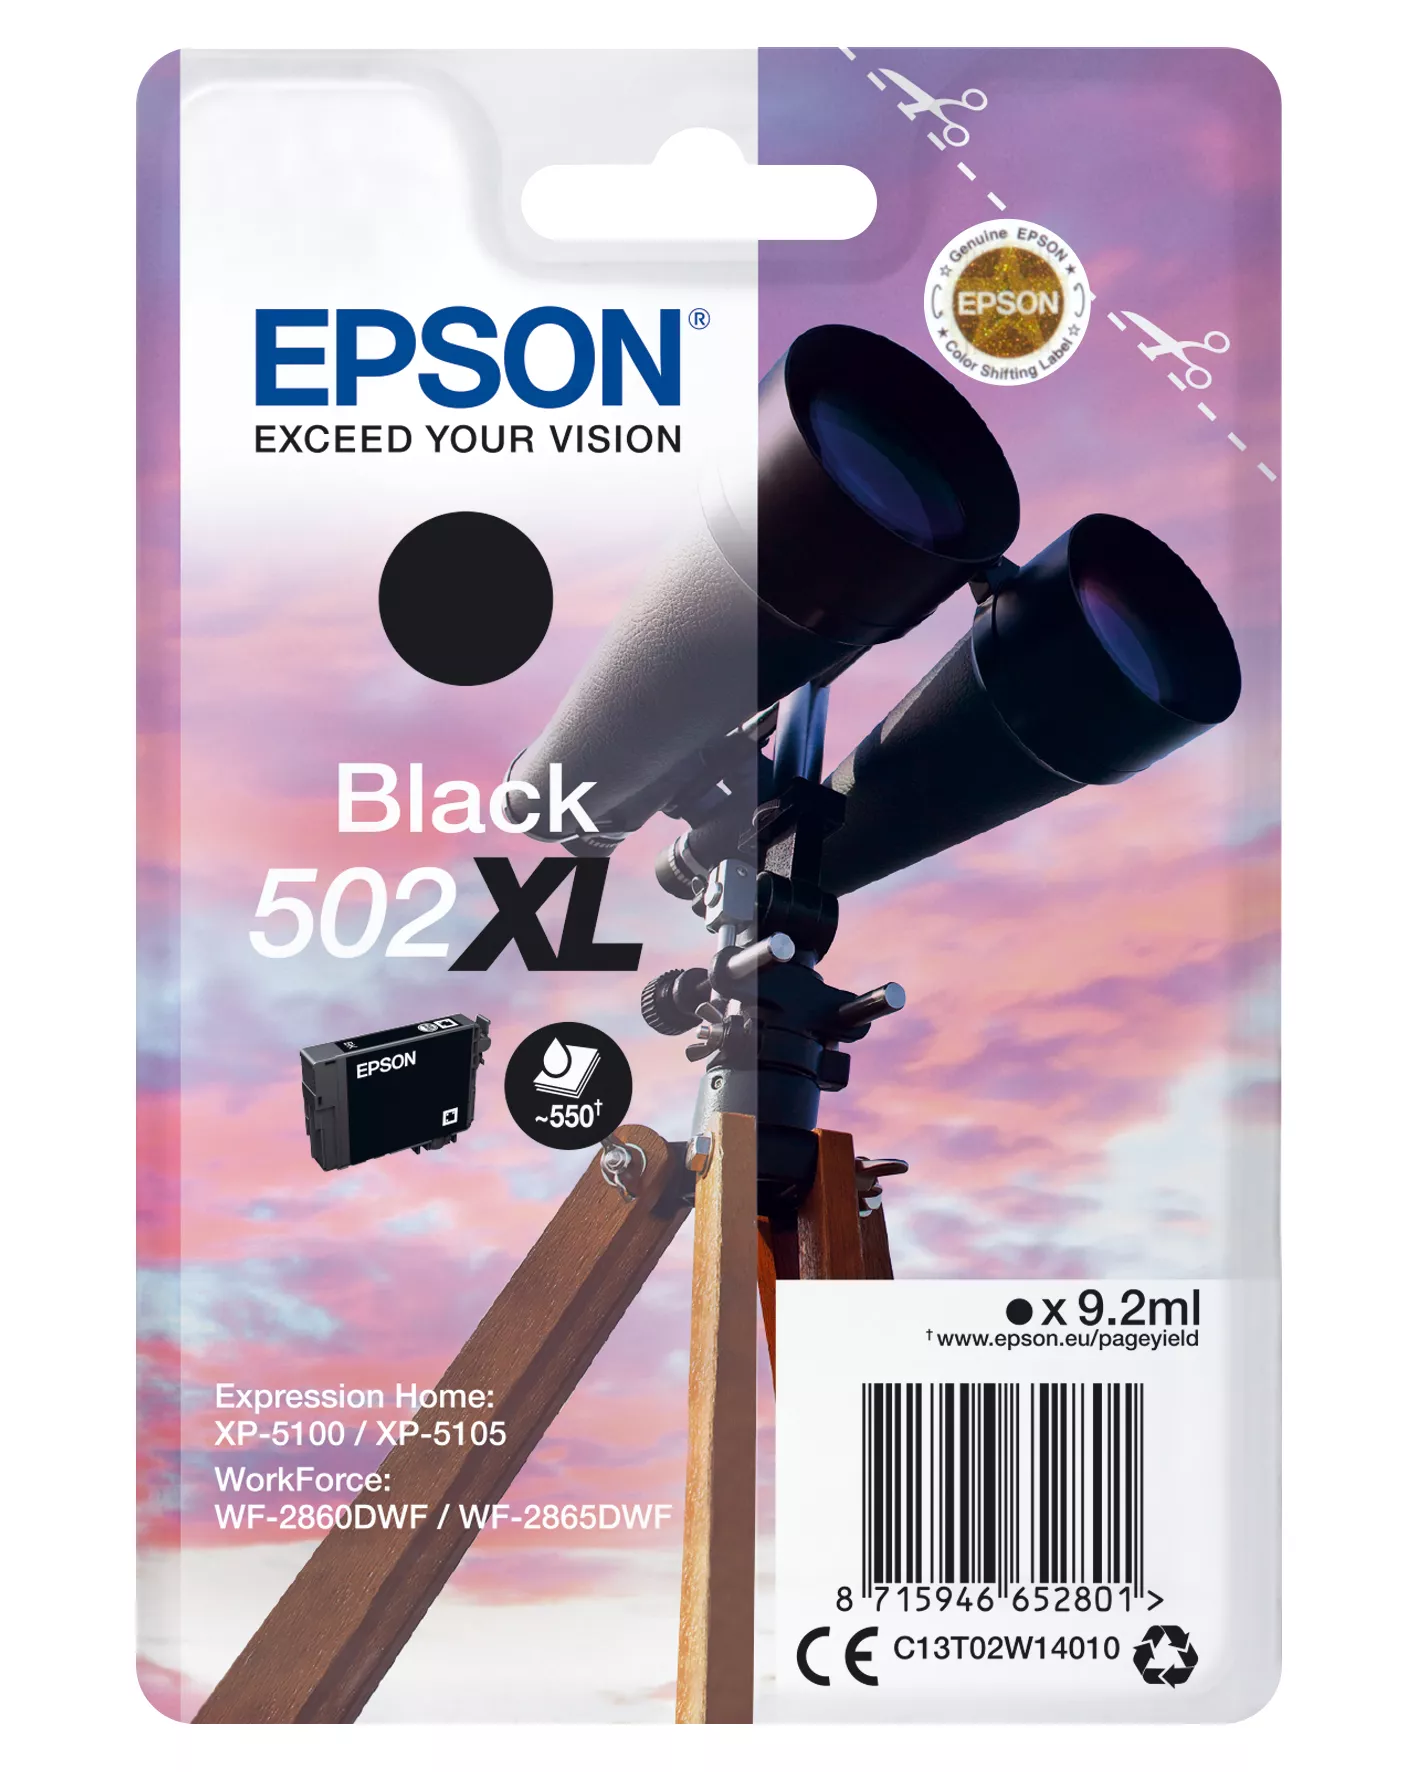 Achat EPSON Singlepack Black 502XL Ink - 8715946652801